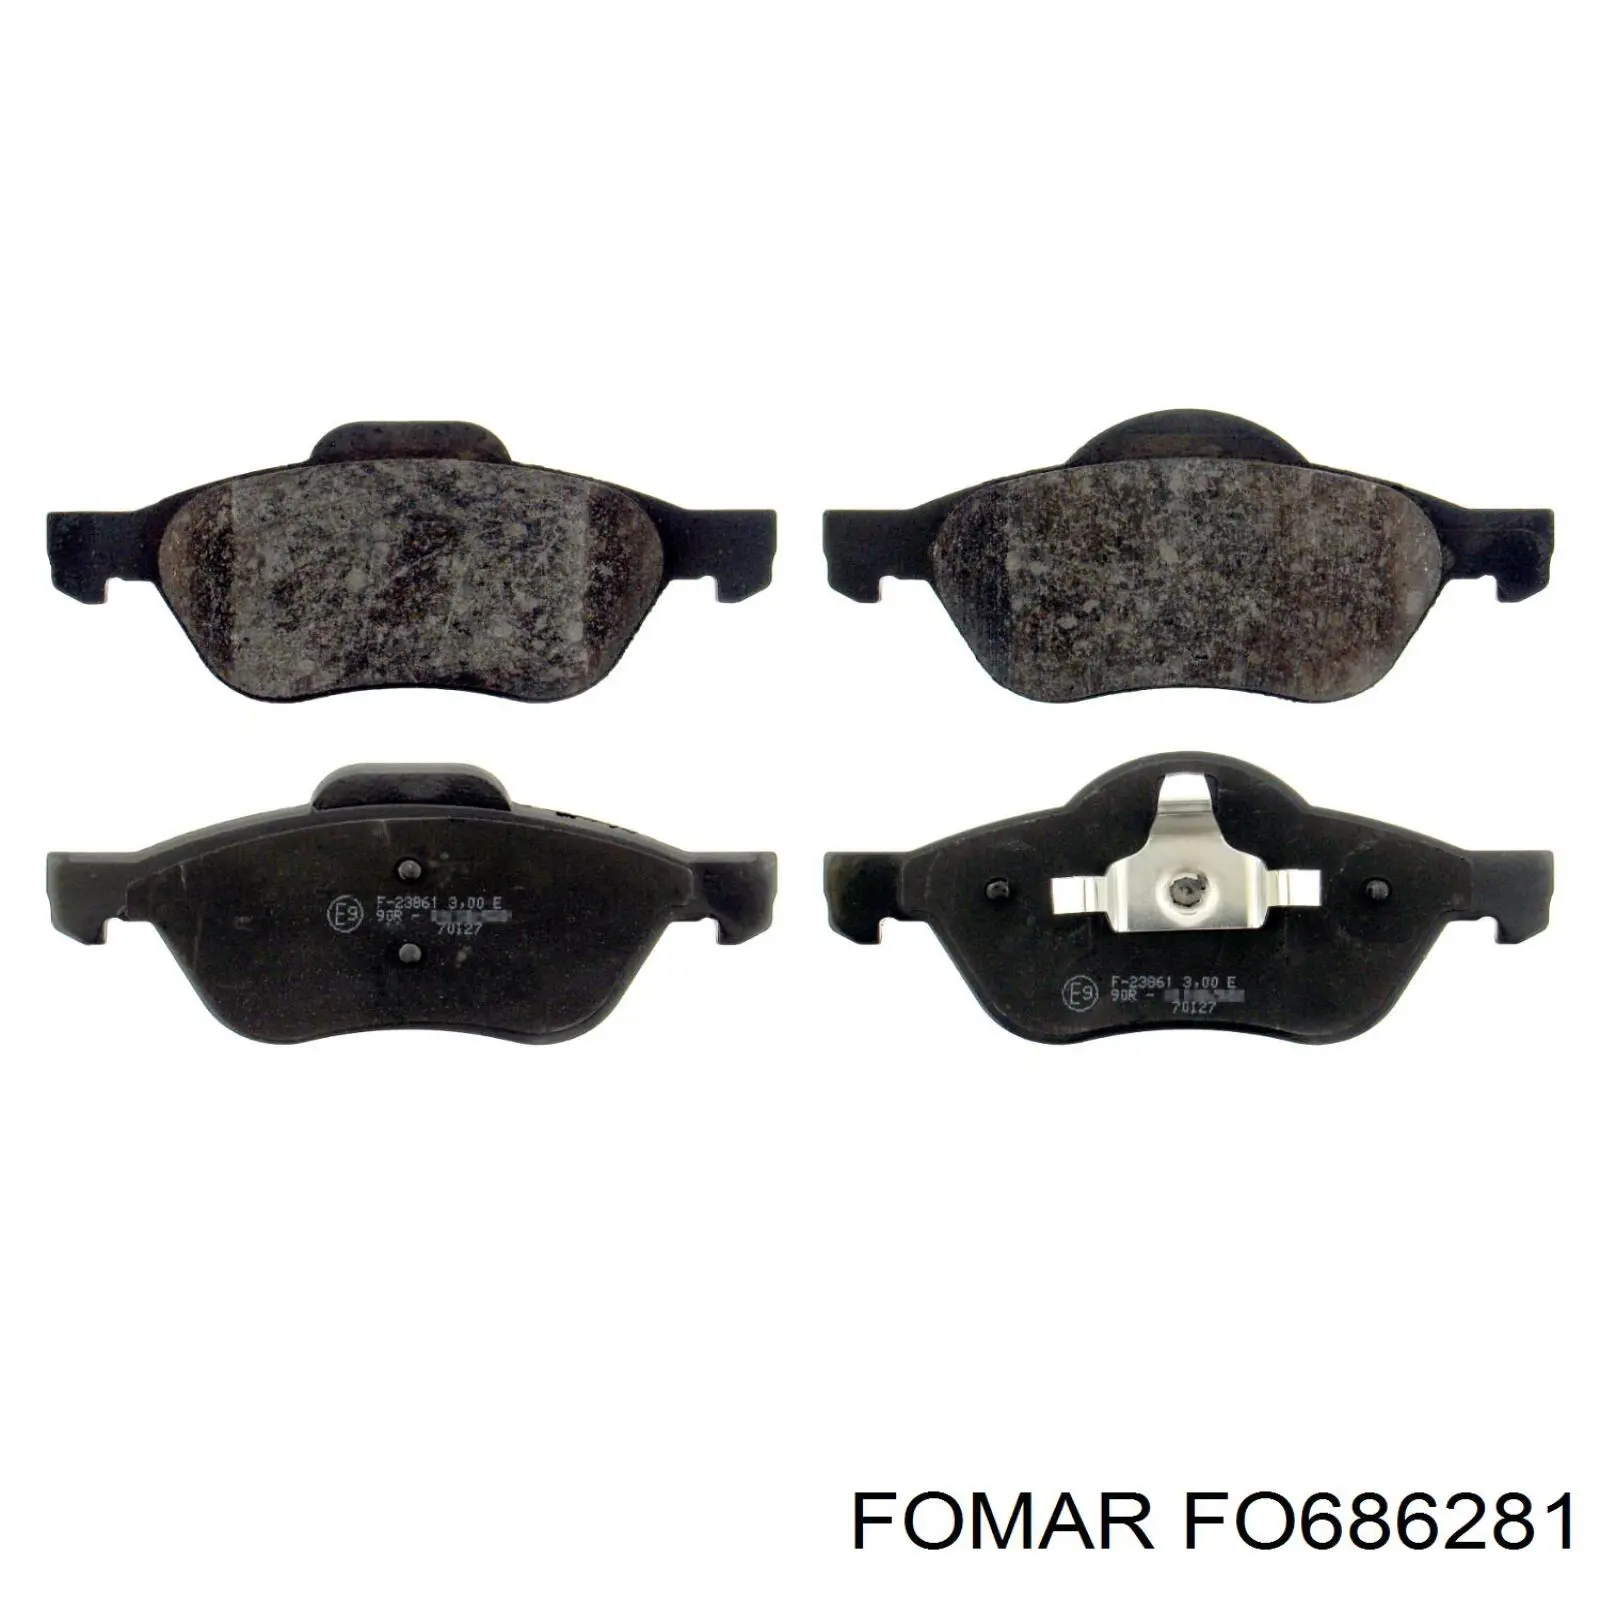 FO 686281 Fomar Roulunds sapatas do freio dianteiras de disco